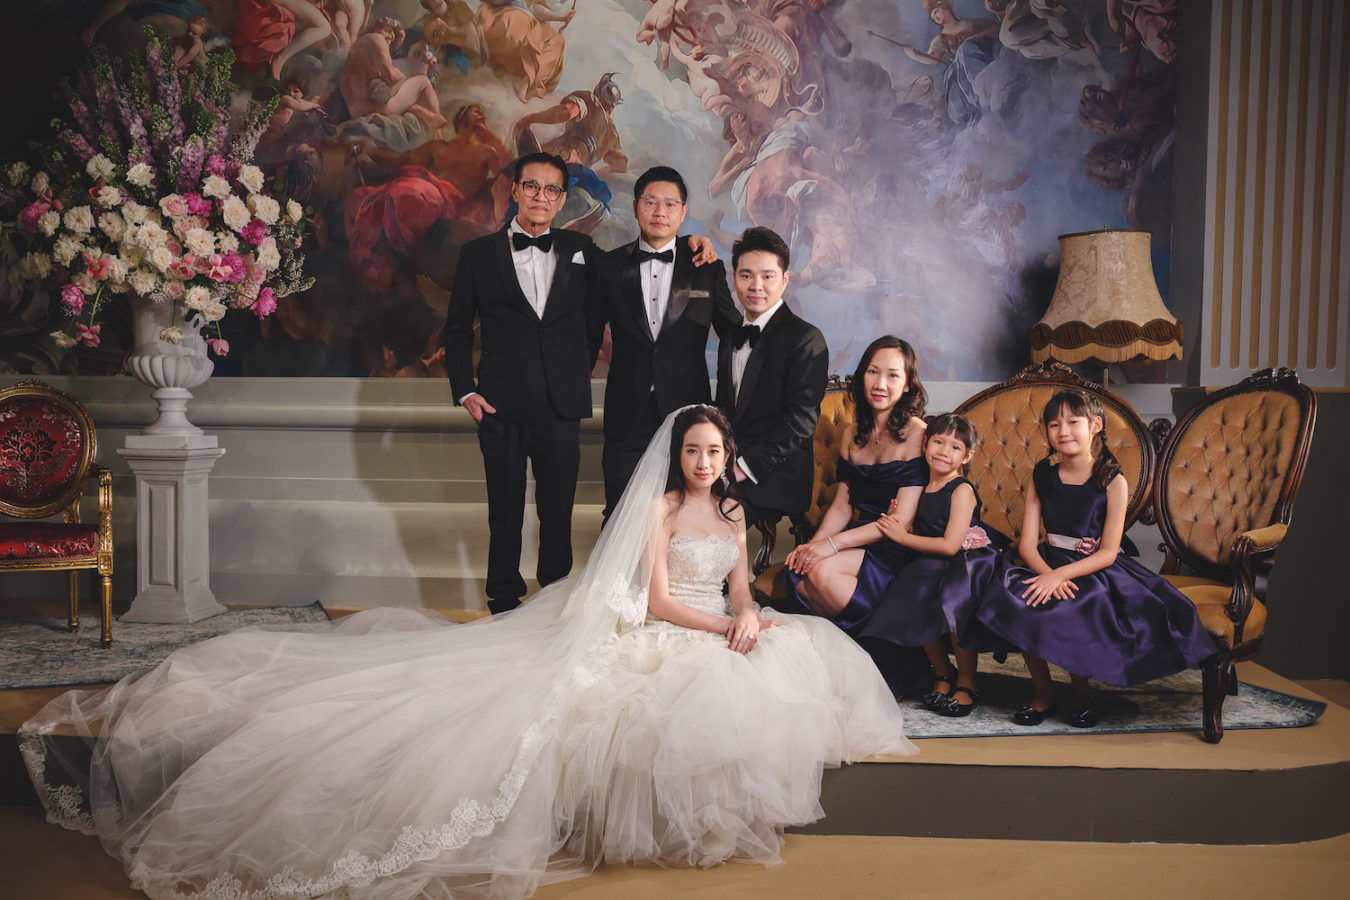 Louise Taechaubol & Pasu Wachirapong Tie the Knot with an Utterly Beautiful Wedding Reception